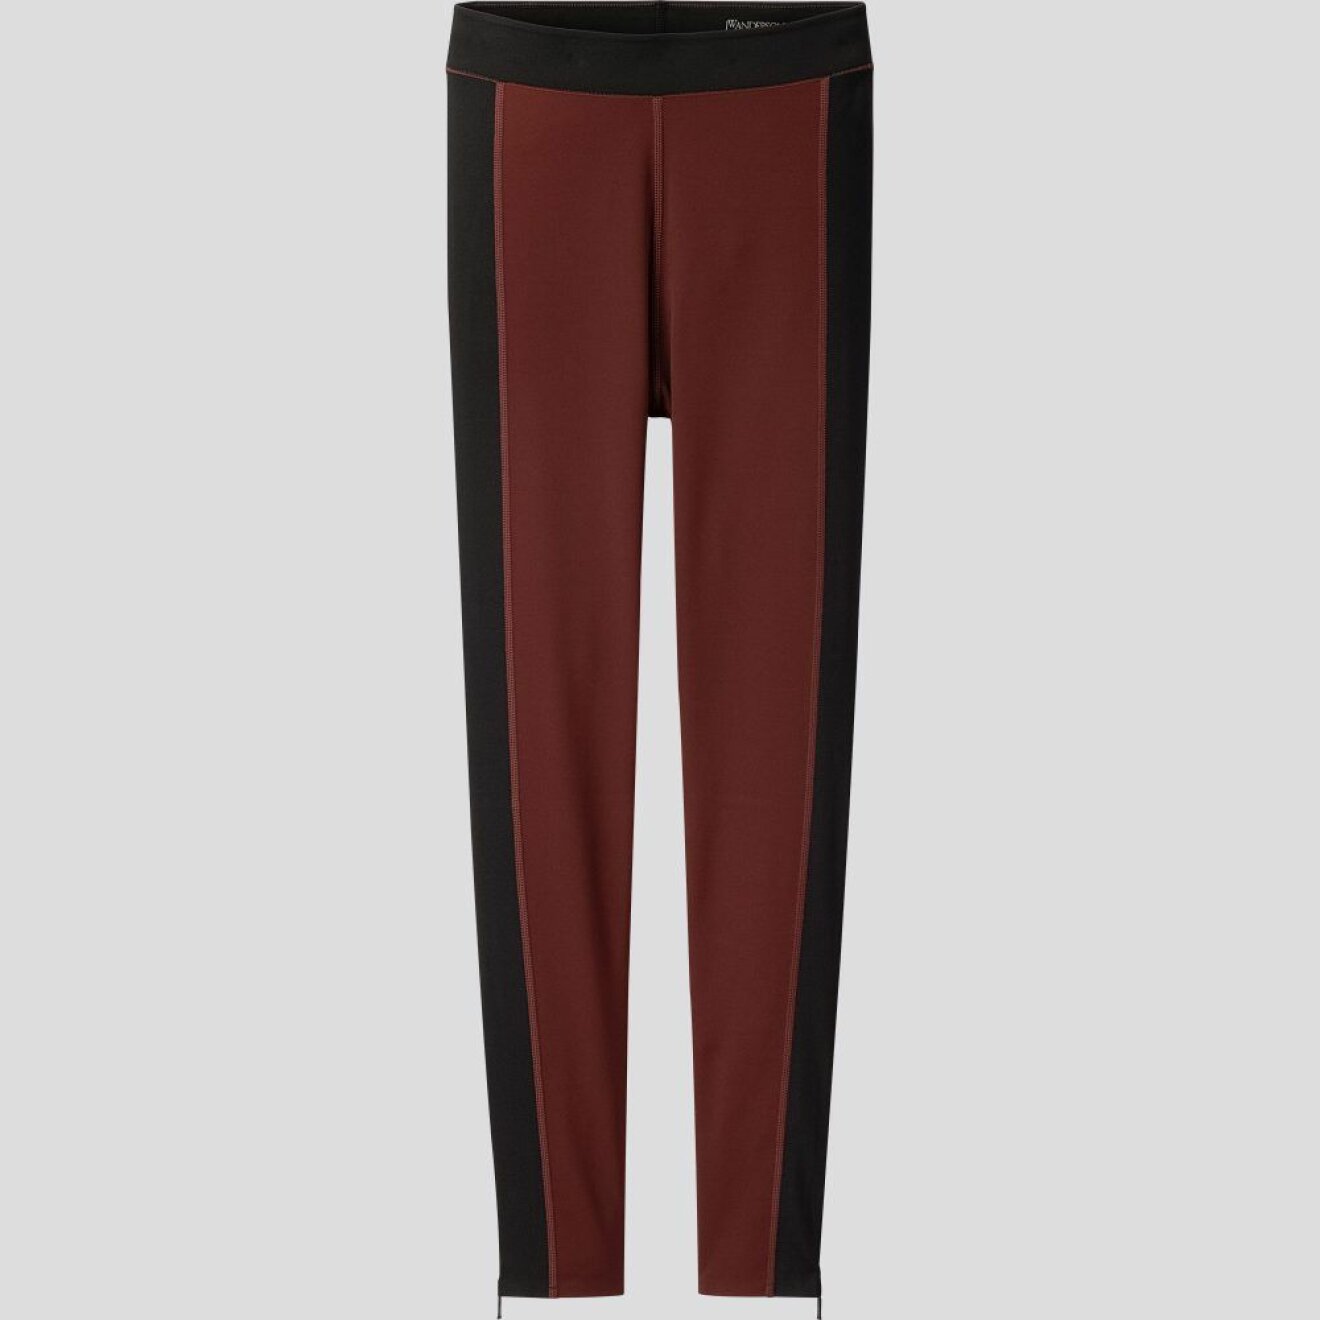 Uniqlo x JW Anderson FW19, svartröda leggings